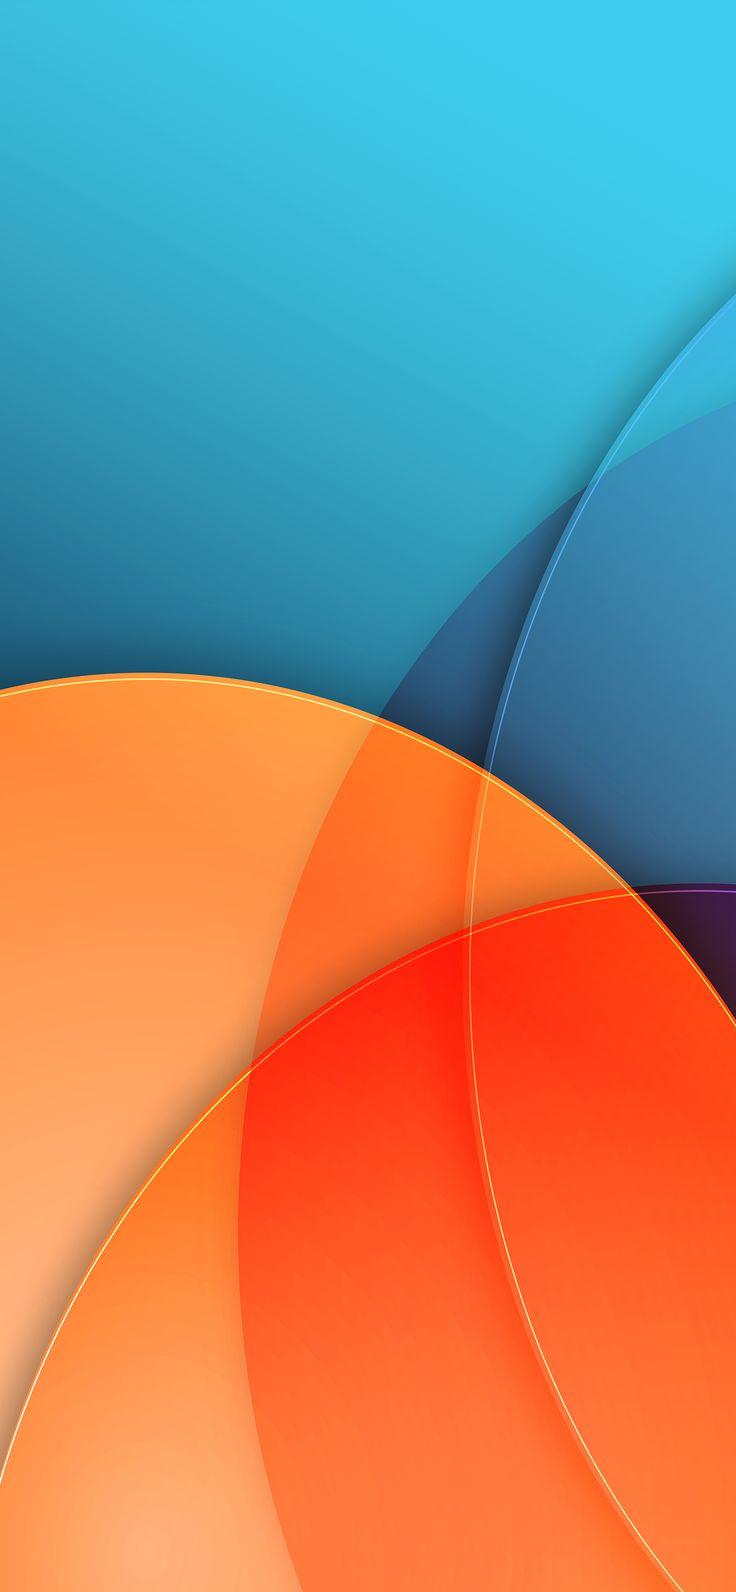 Ios Beta Orange And Blue Gradient Radius By Hk3ton iPhone